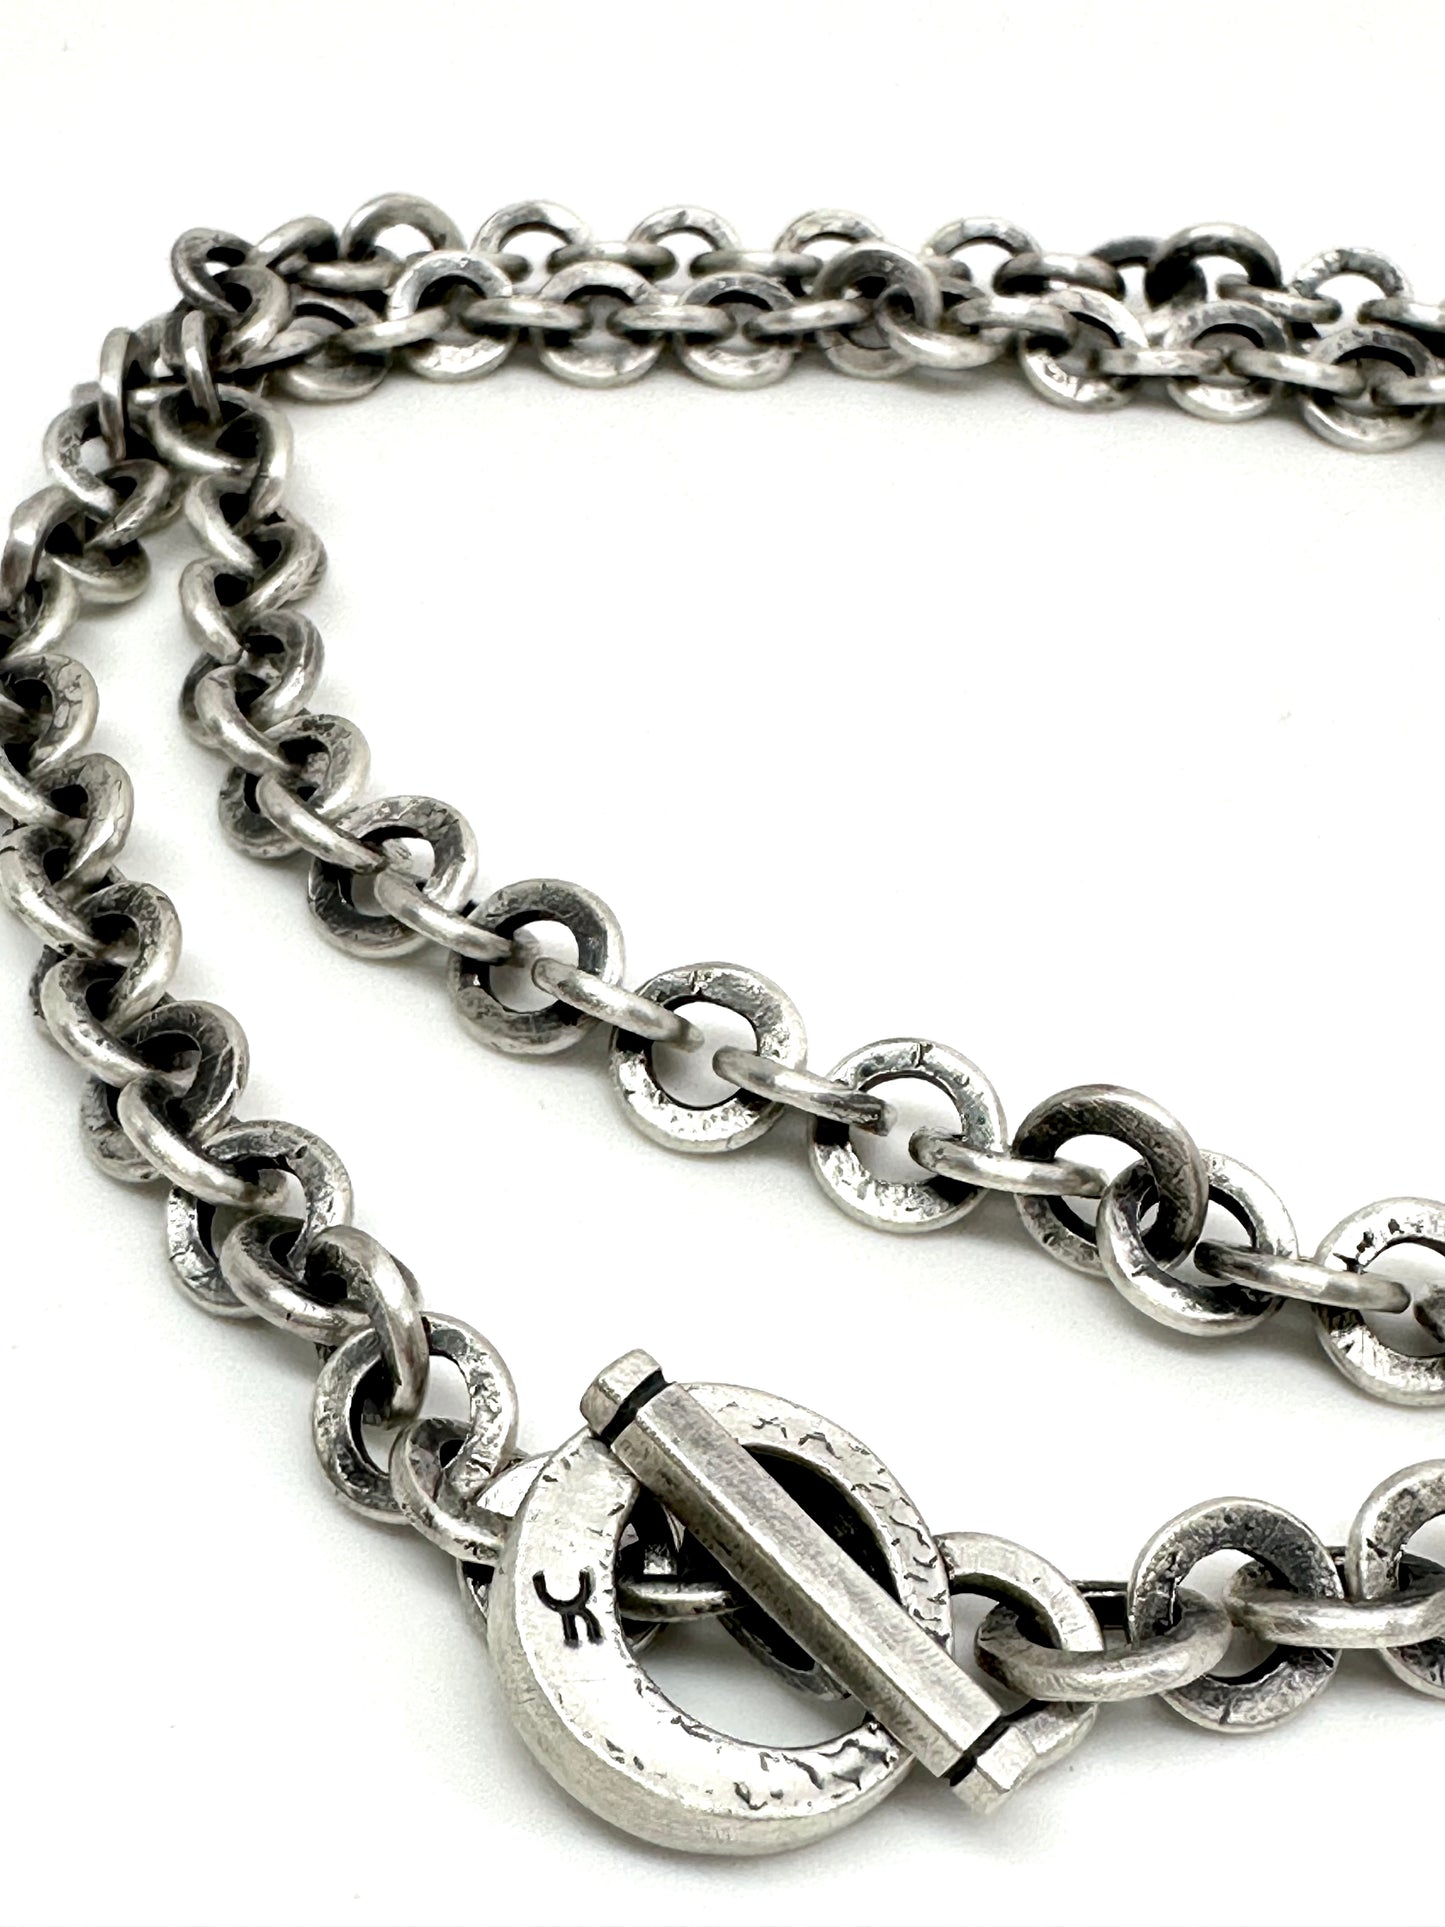 XF Heavy Round Links Chain